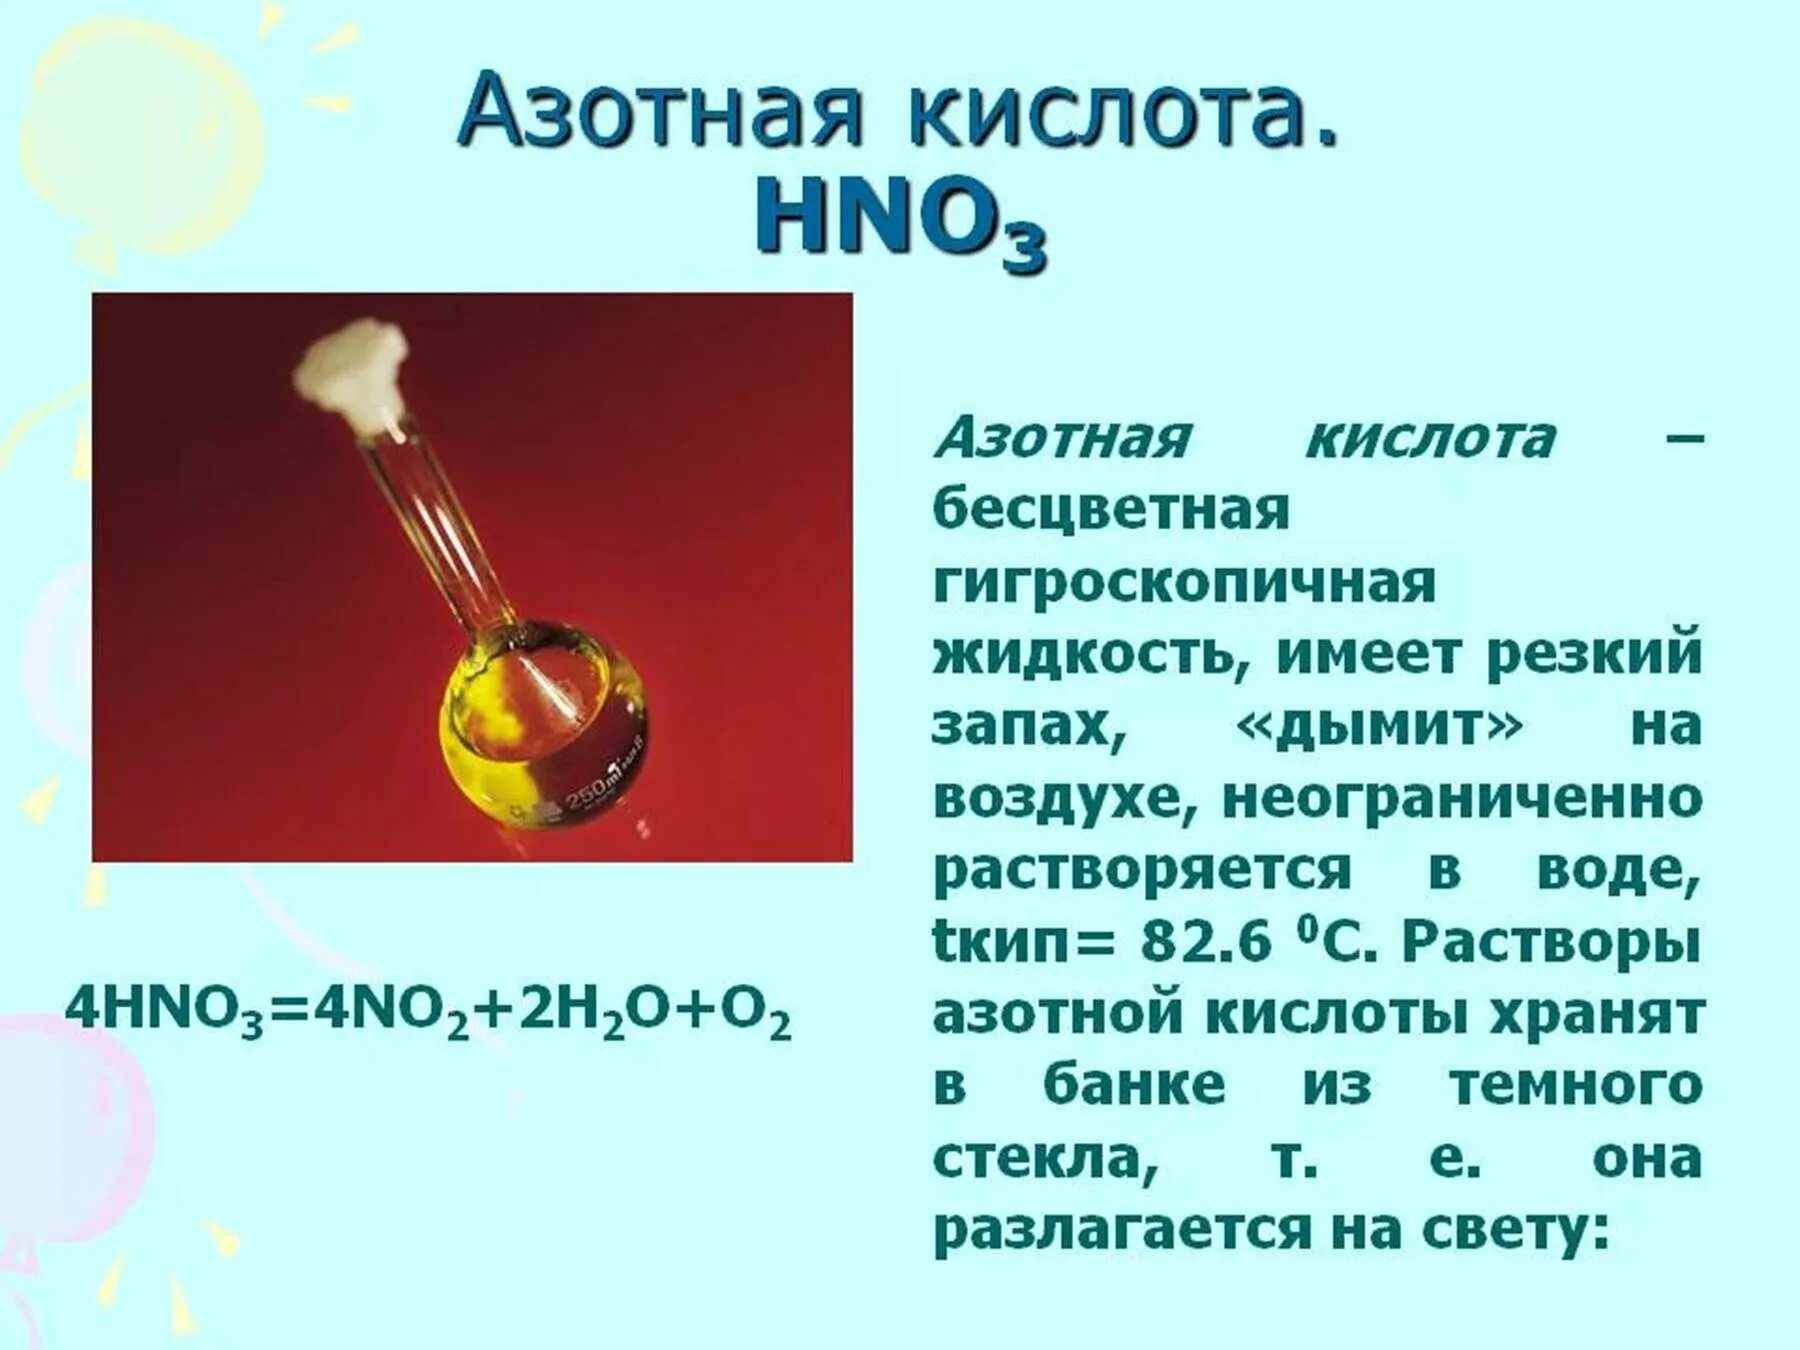 Фтор азотная кислота. Азотная кислота hno3. Азотная кислота обладает резким запахом. Слайд азотная кислота. Физические св ва азотной кислоты.